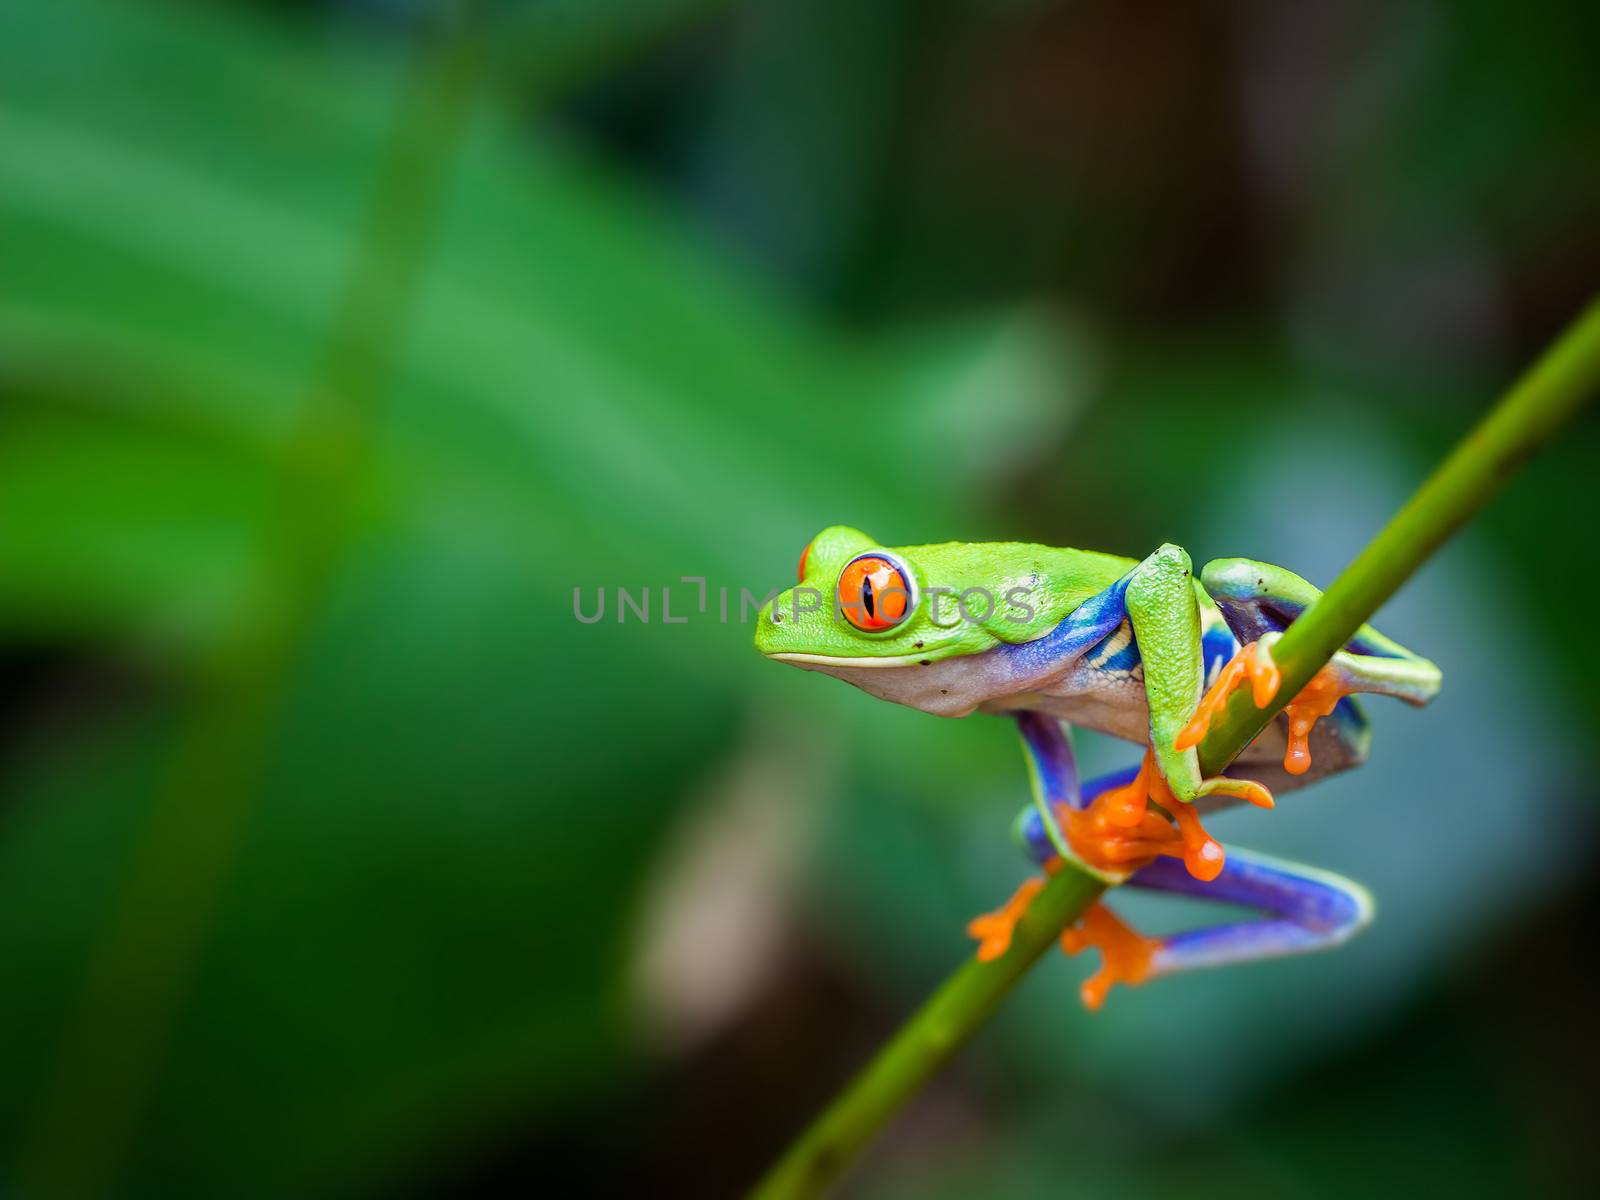 Red eye frog by dynamicfoto